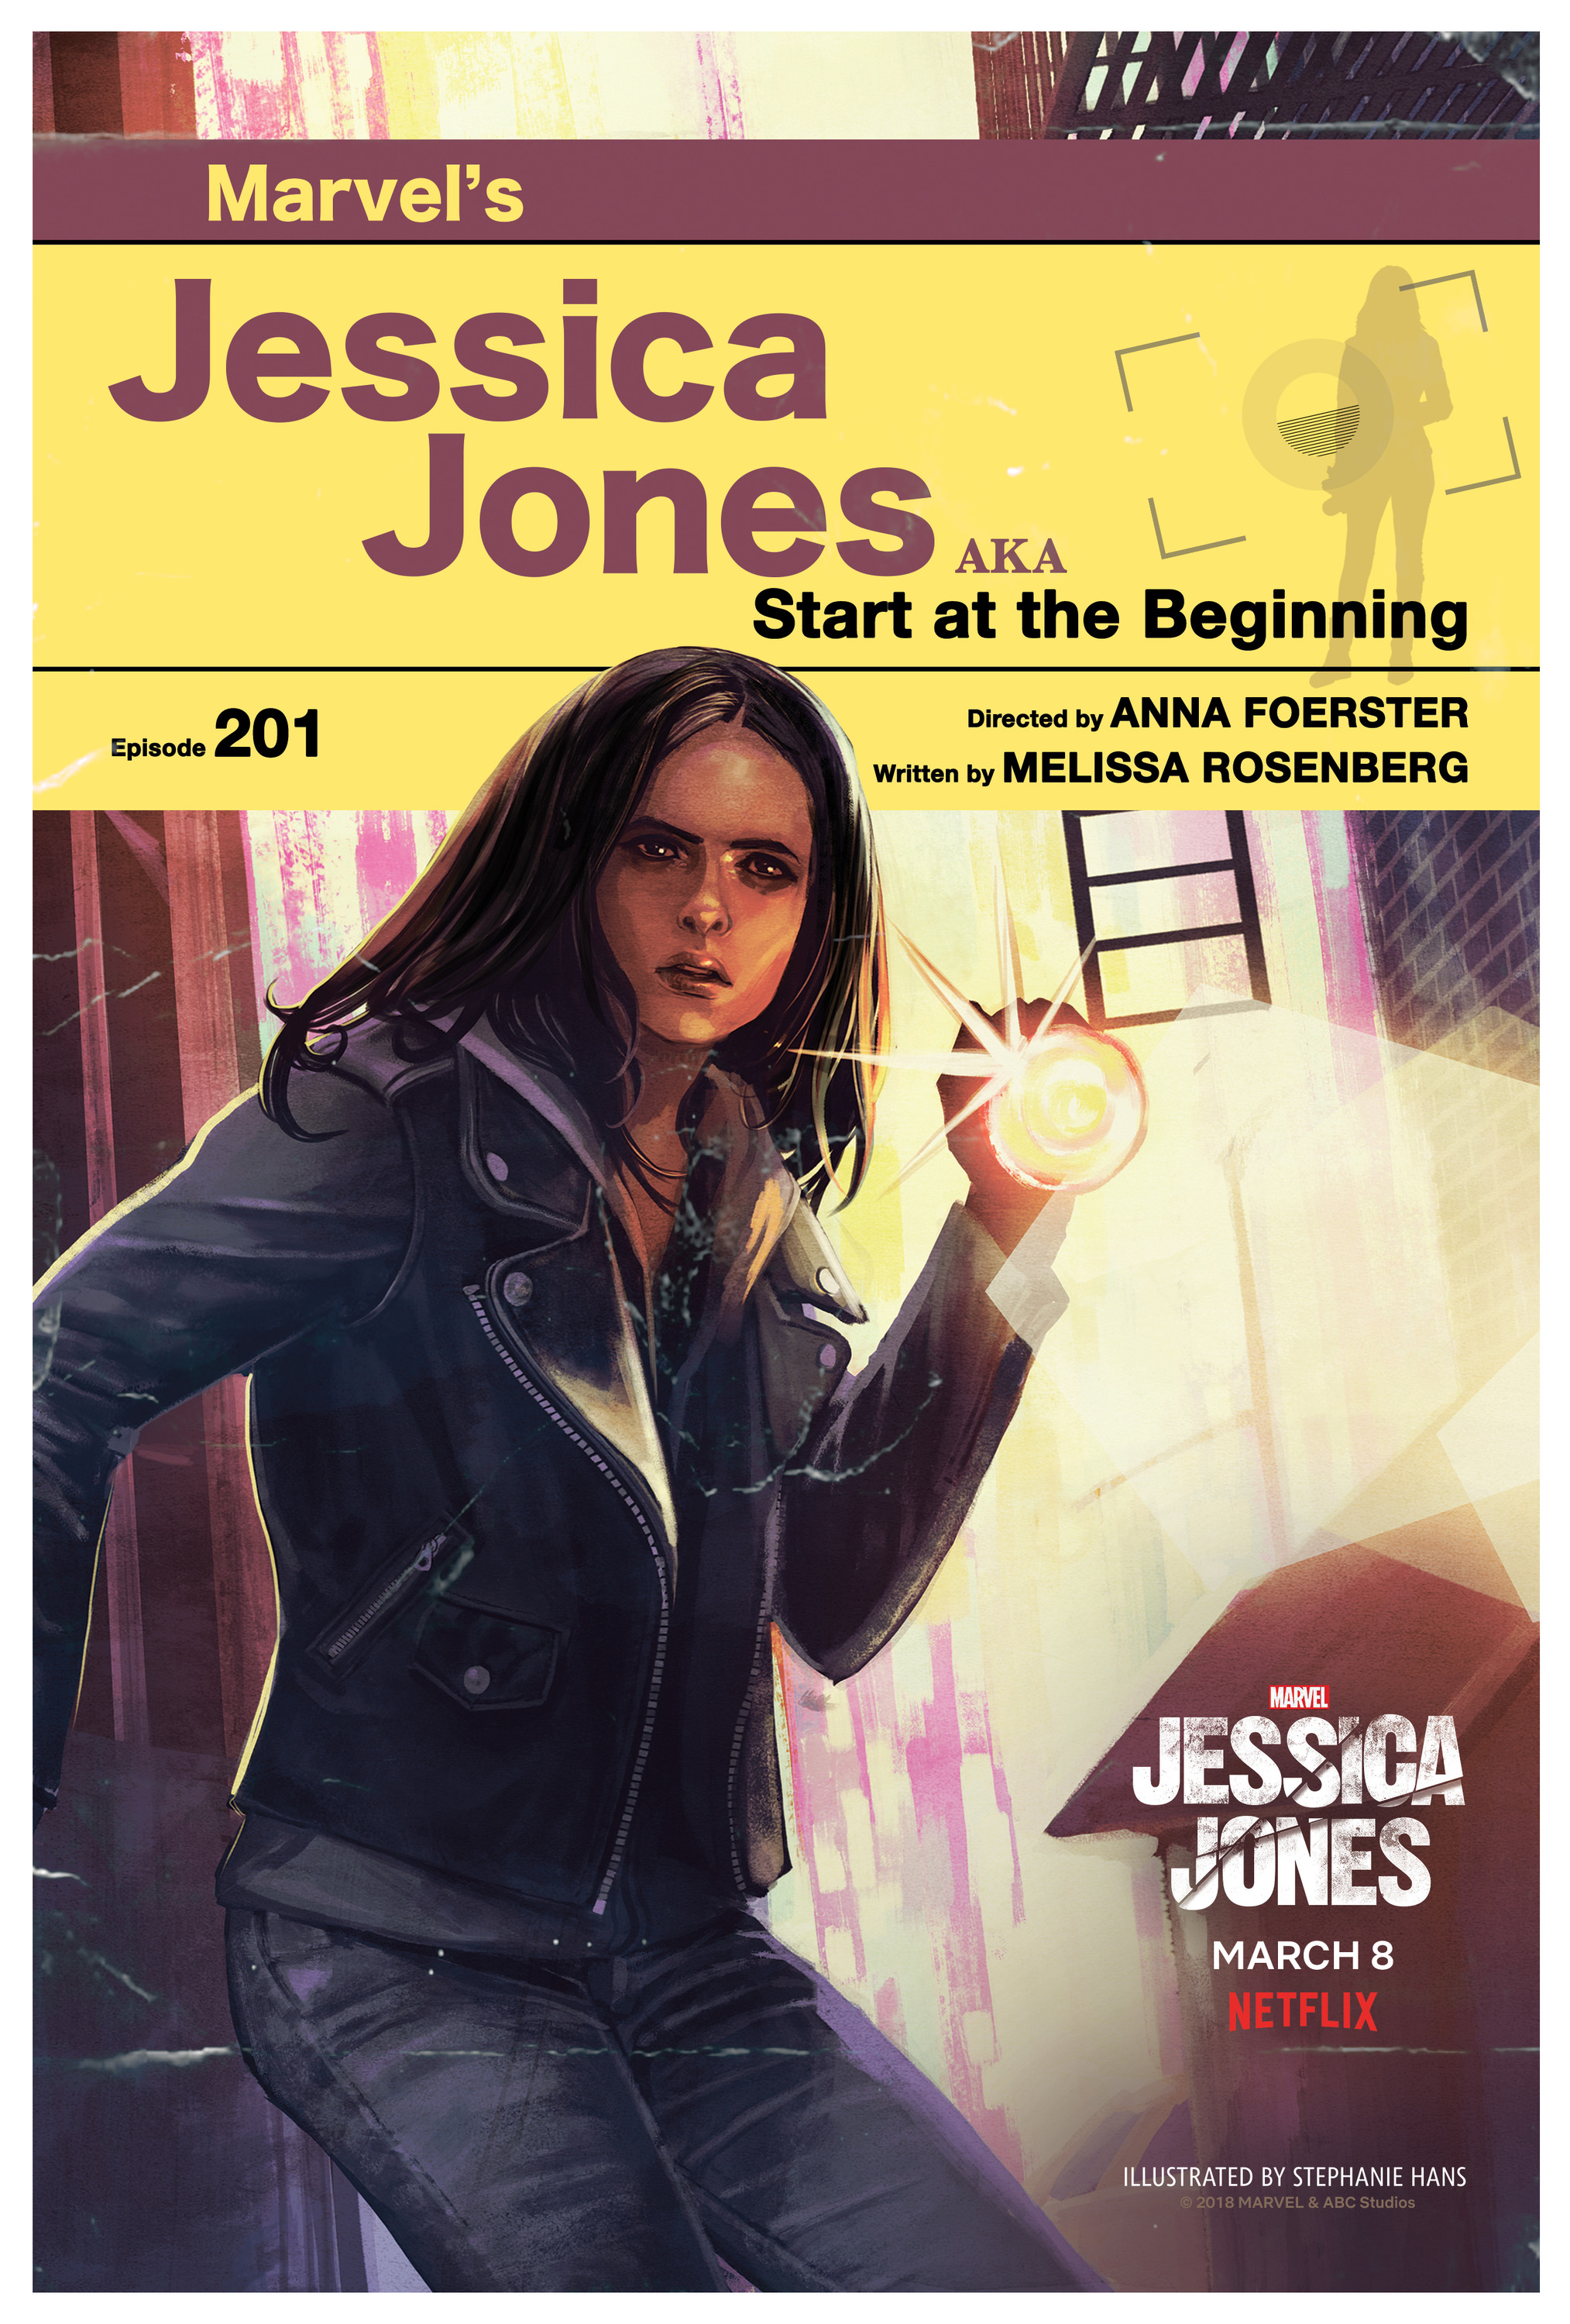 Mega Sized TV Poster Image for Jessica Jones (#7 of 21)